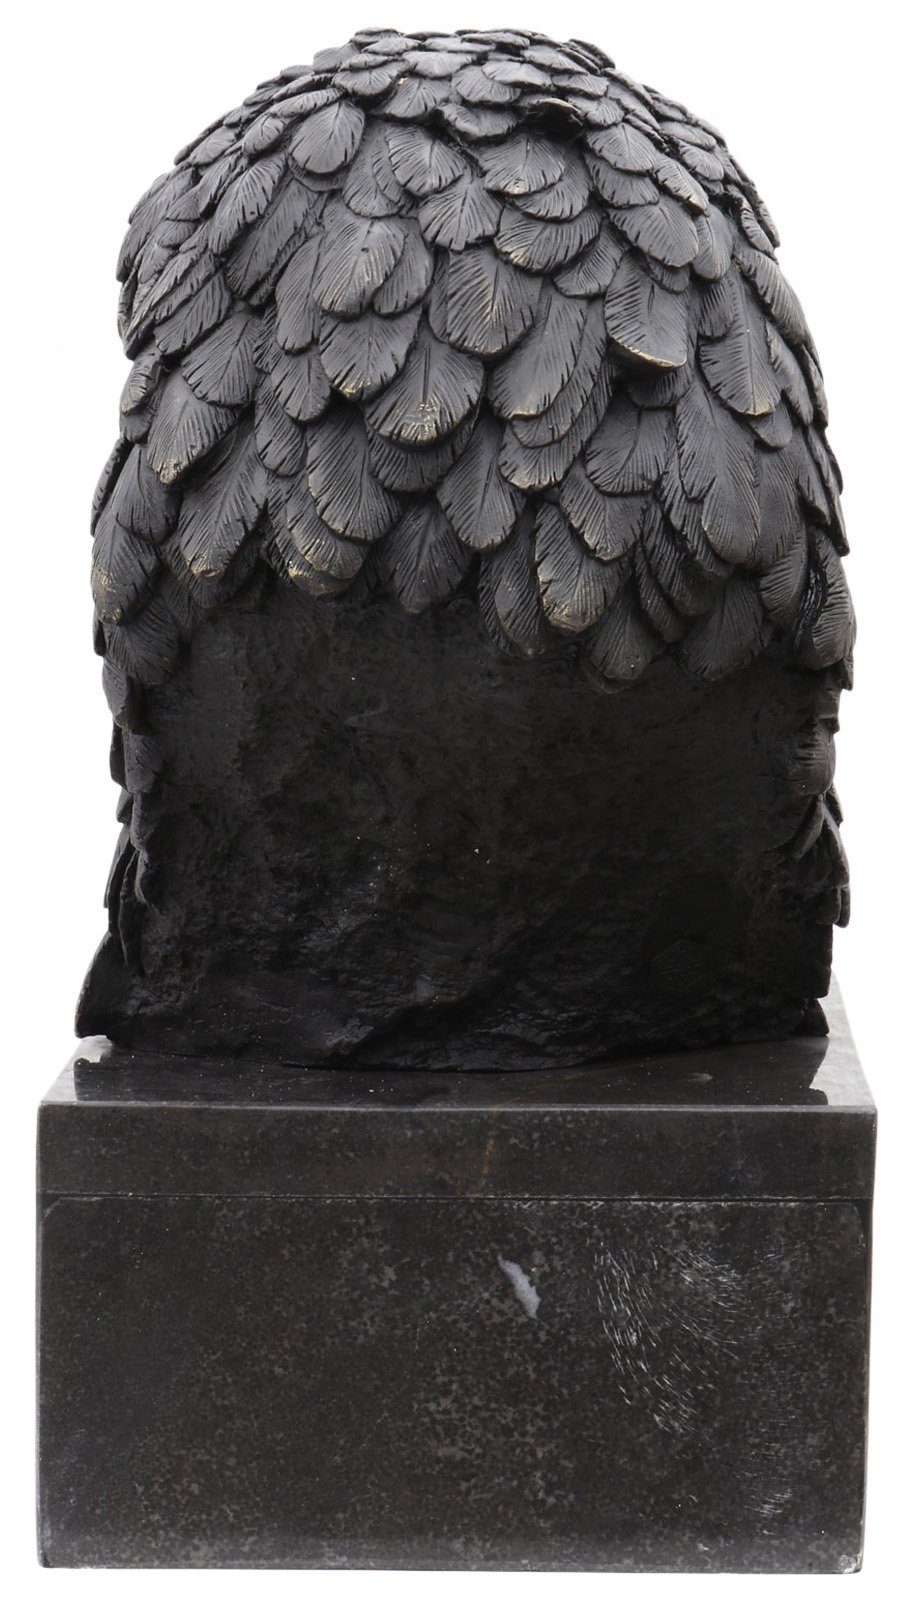 33cm Bronze im Adler Antik-Stil Skulptur Büste Statue Bronzeskulptur Aubaho Figur